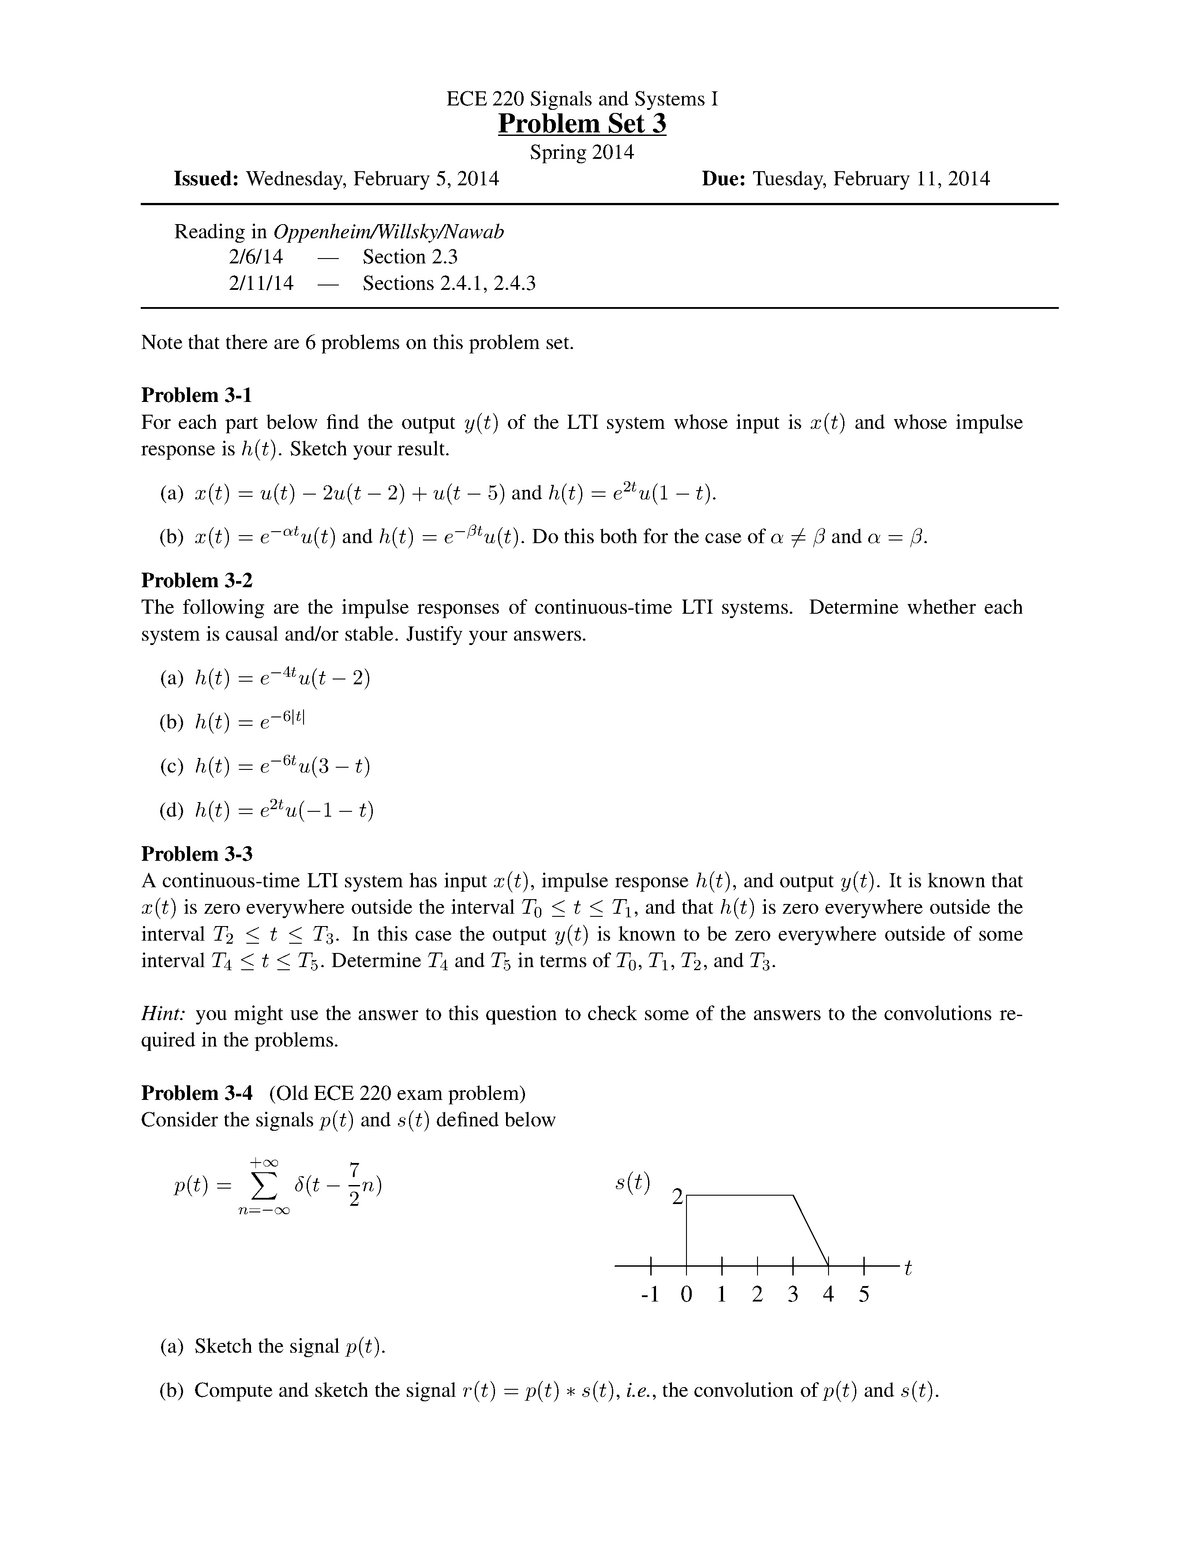 Problem Set 03 14 Signals And Systems I George Mason Studocu